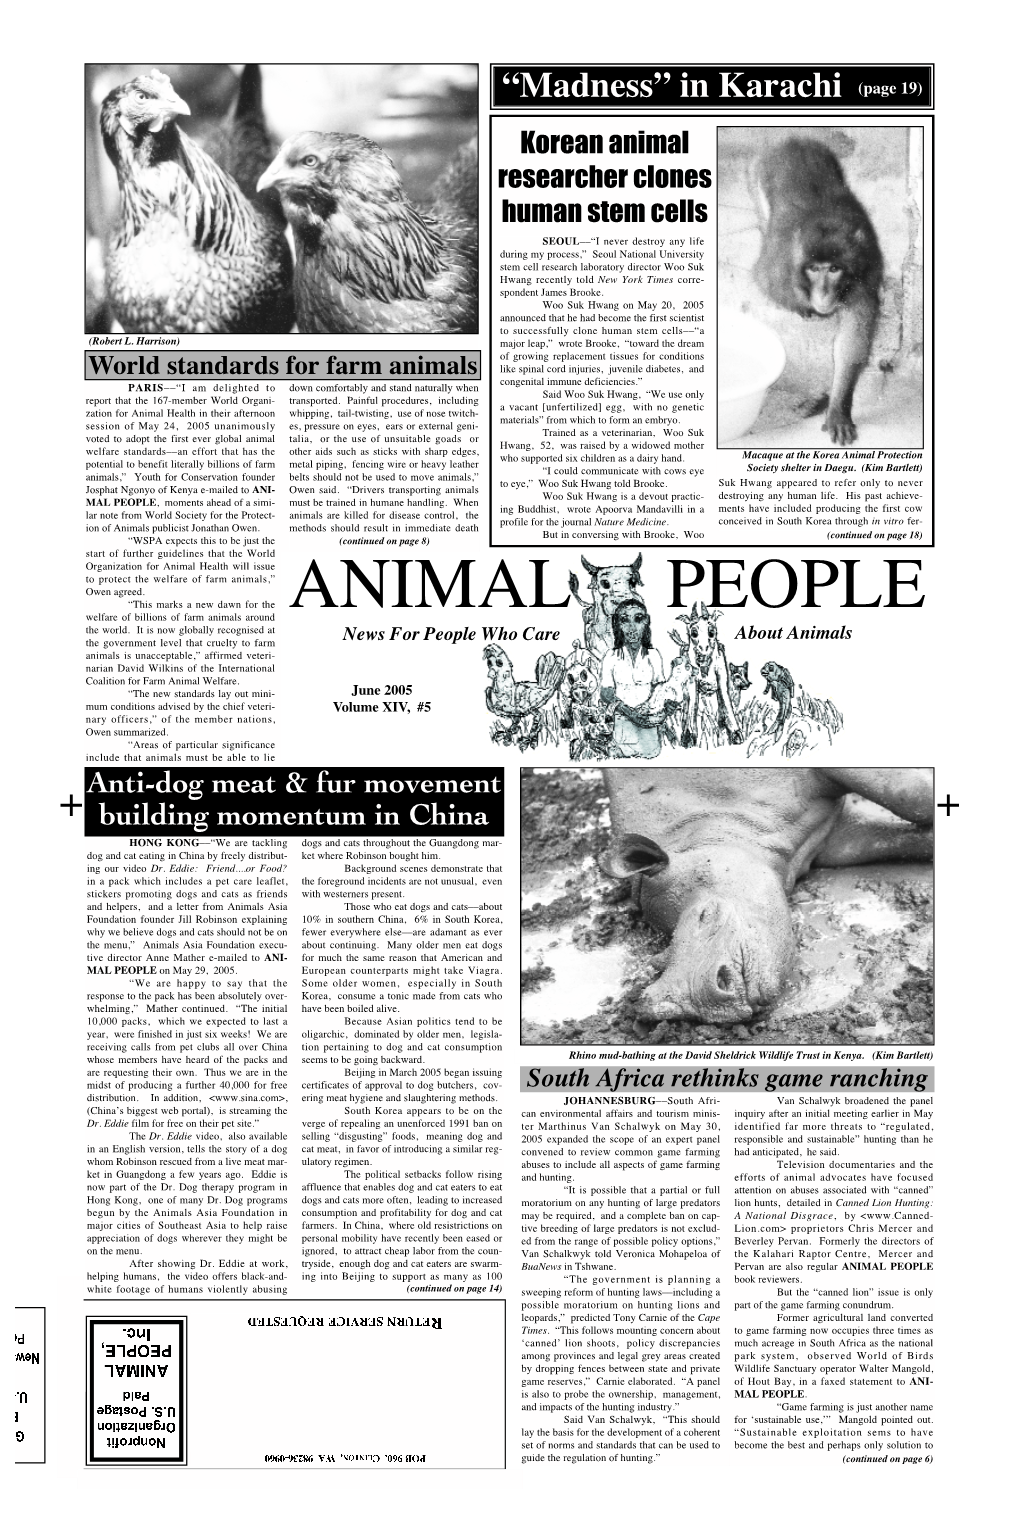 ANIMAL PEOPLE Newspaper Goes to Press